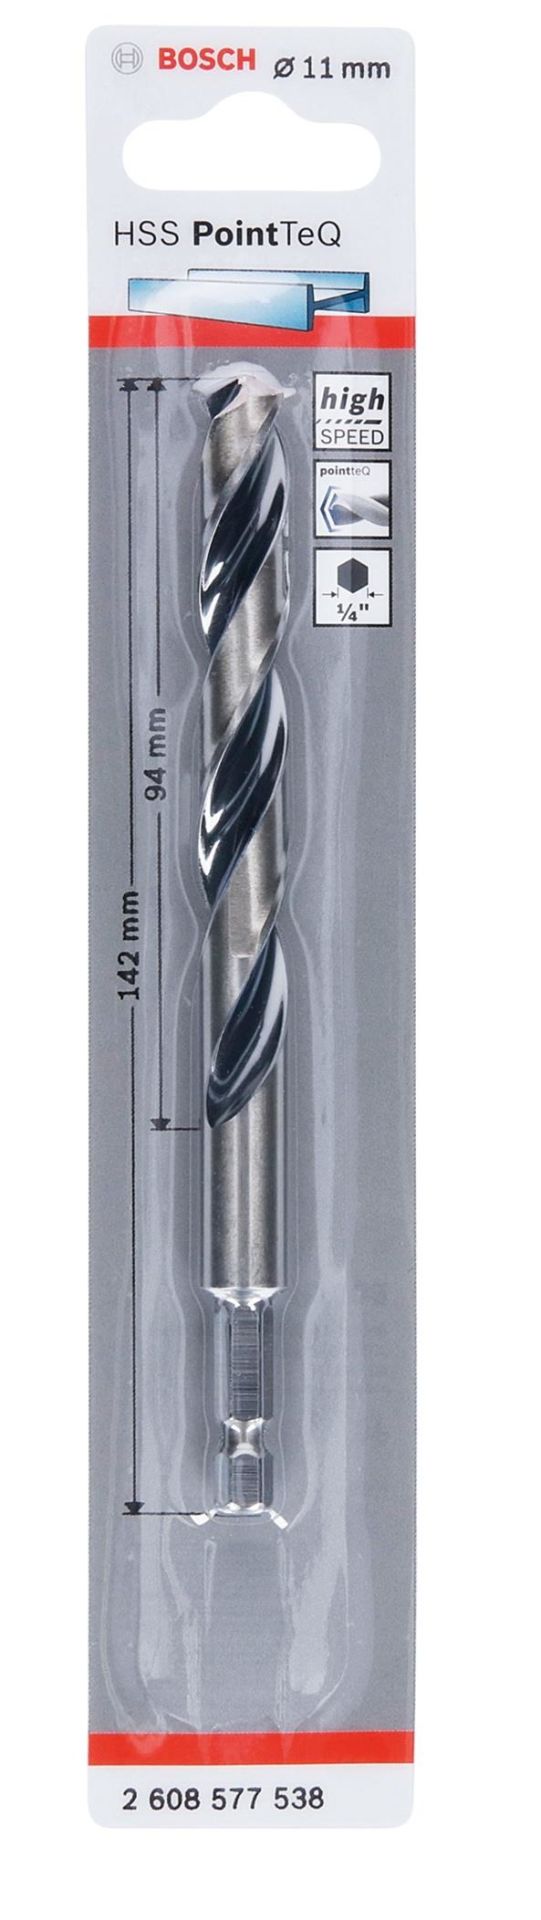 PoinTeQ 11mm 1/4 Adap. Metal Matkap Ucu 1'li 2608577538 Bosch